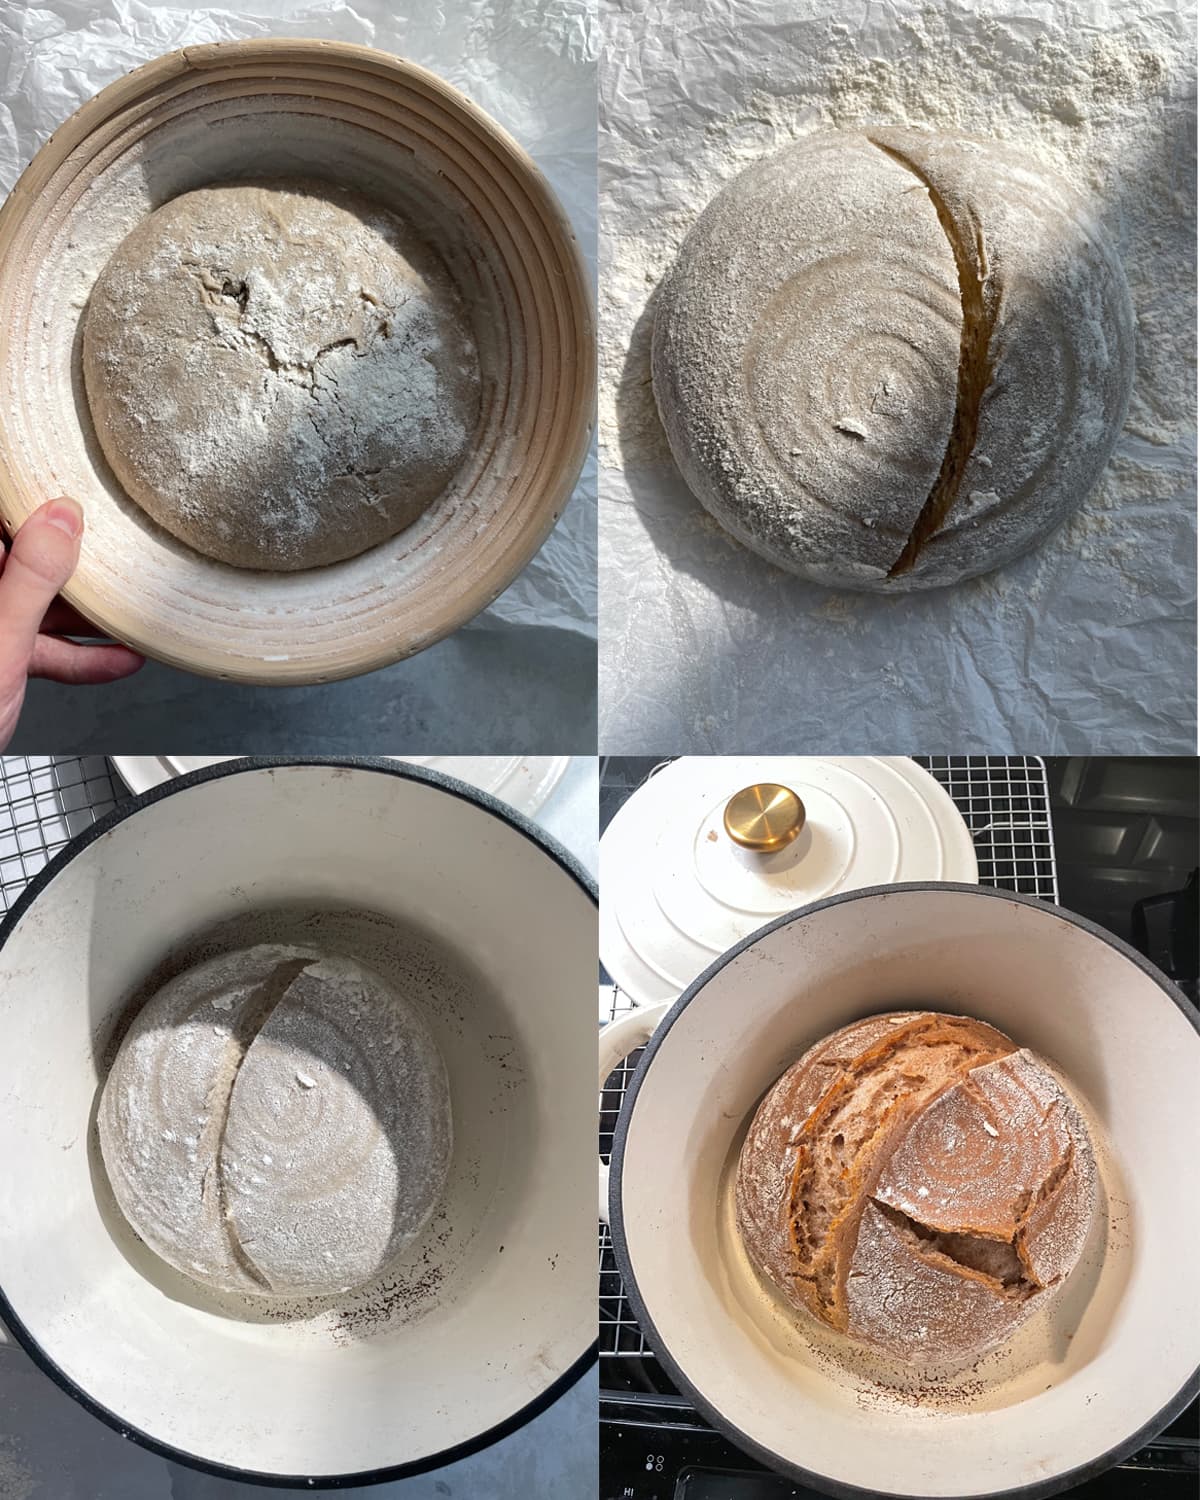 Process of baking a homemade rye sourdough bread. 